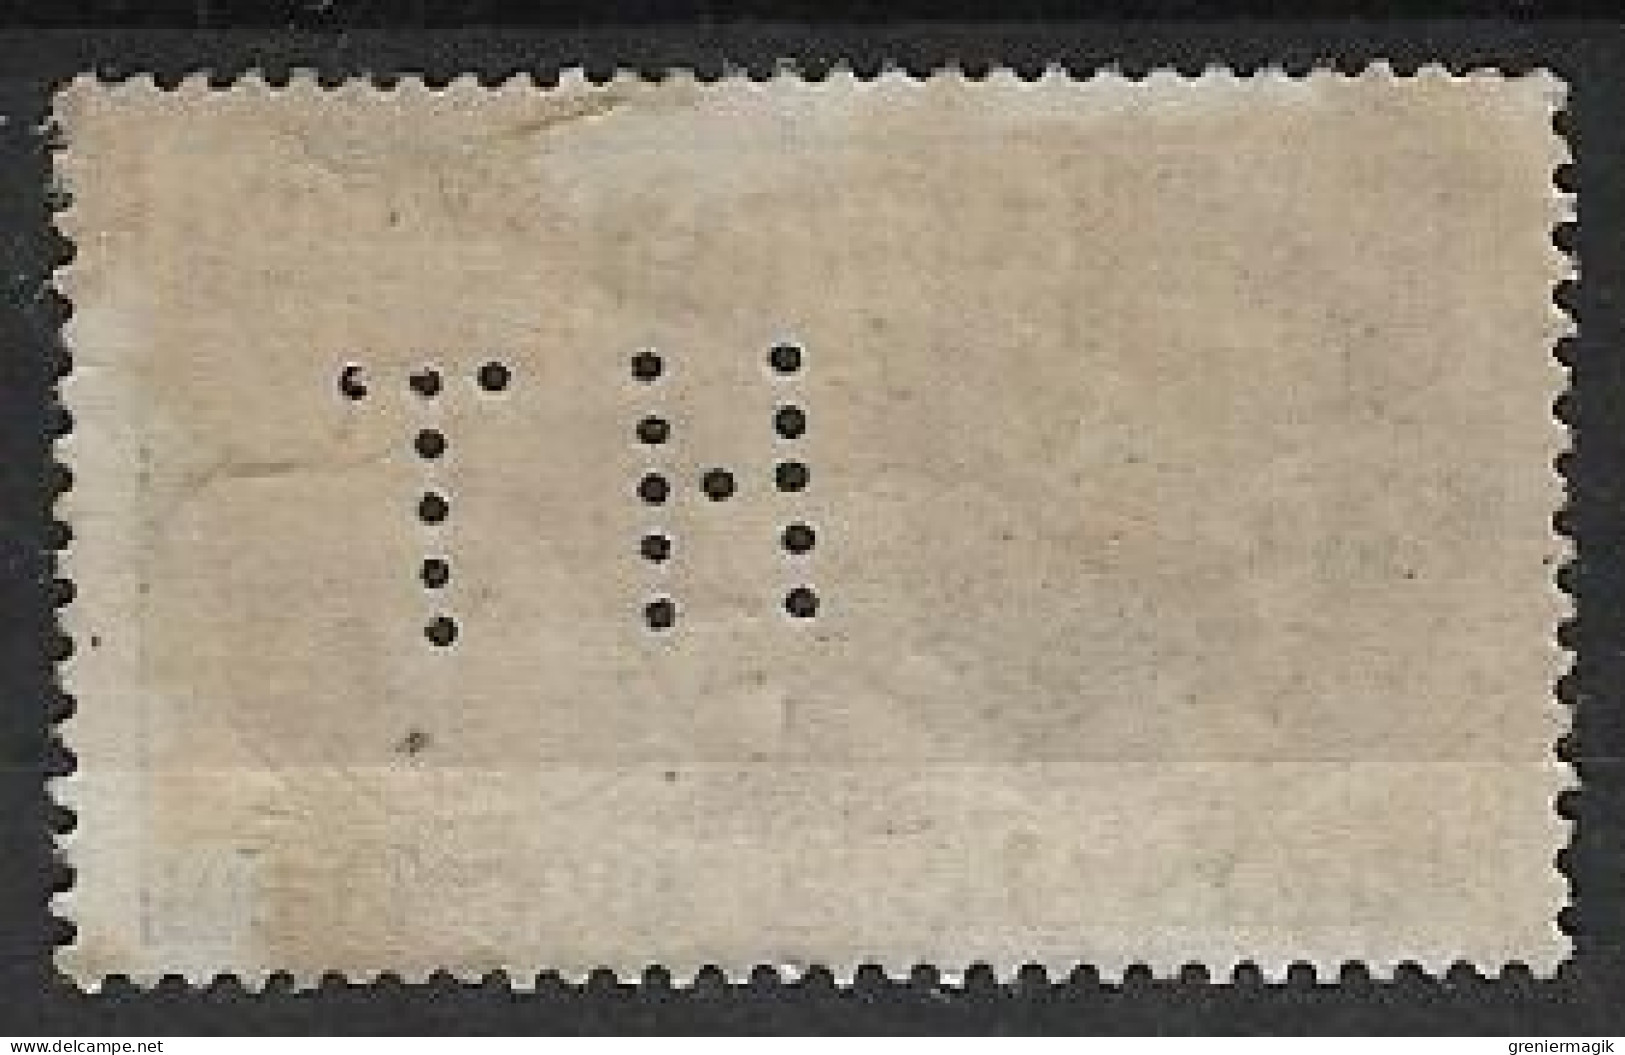 France 1918 Y.T N°156 Neuf * Perforé TH - Croix Rouge 15c + 5c Infirmière Et Navire-hôpital "Asturia" - Unused Stamps